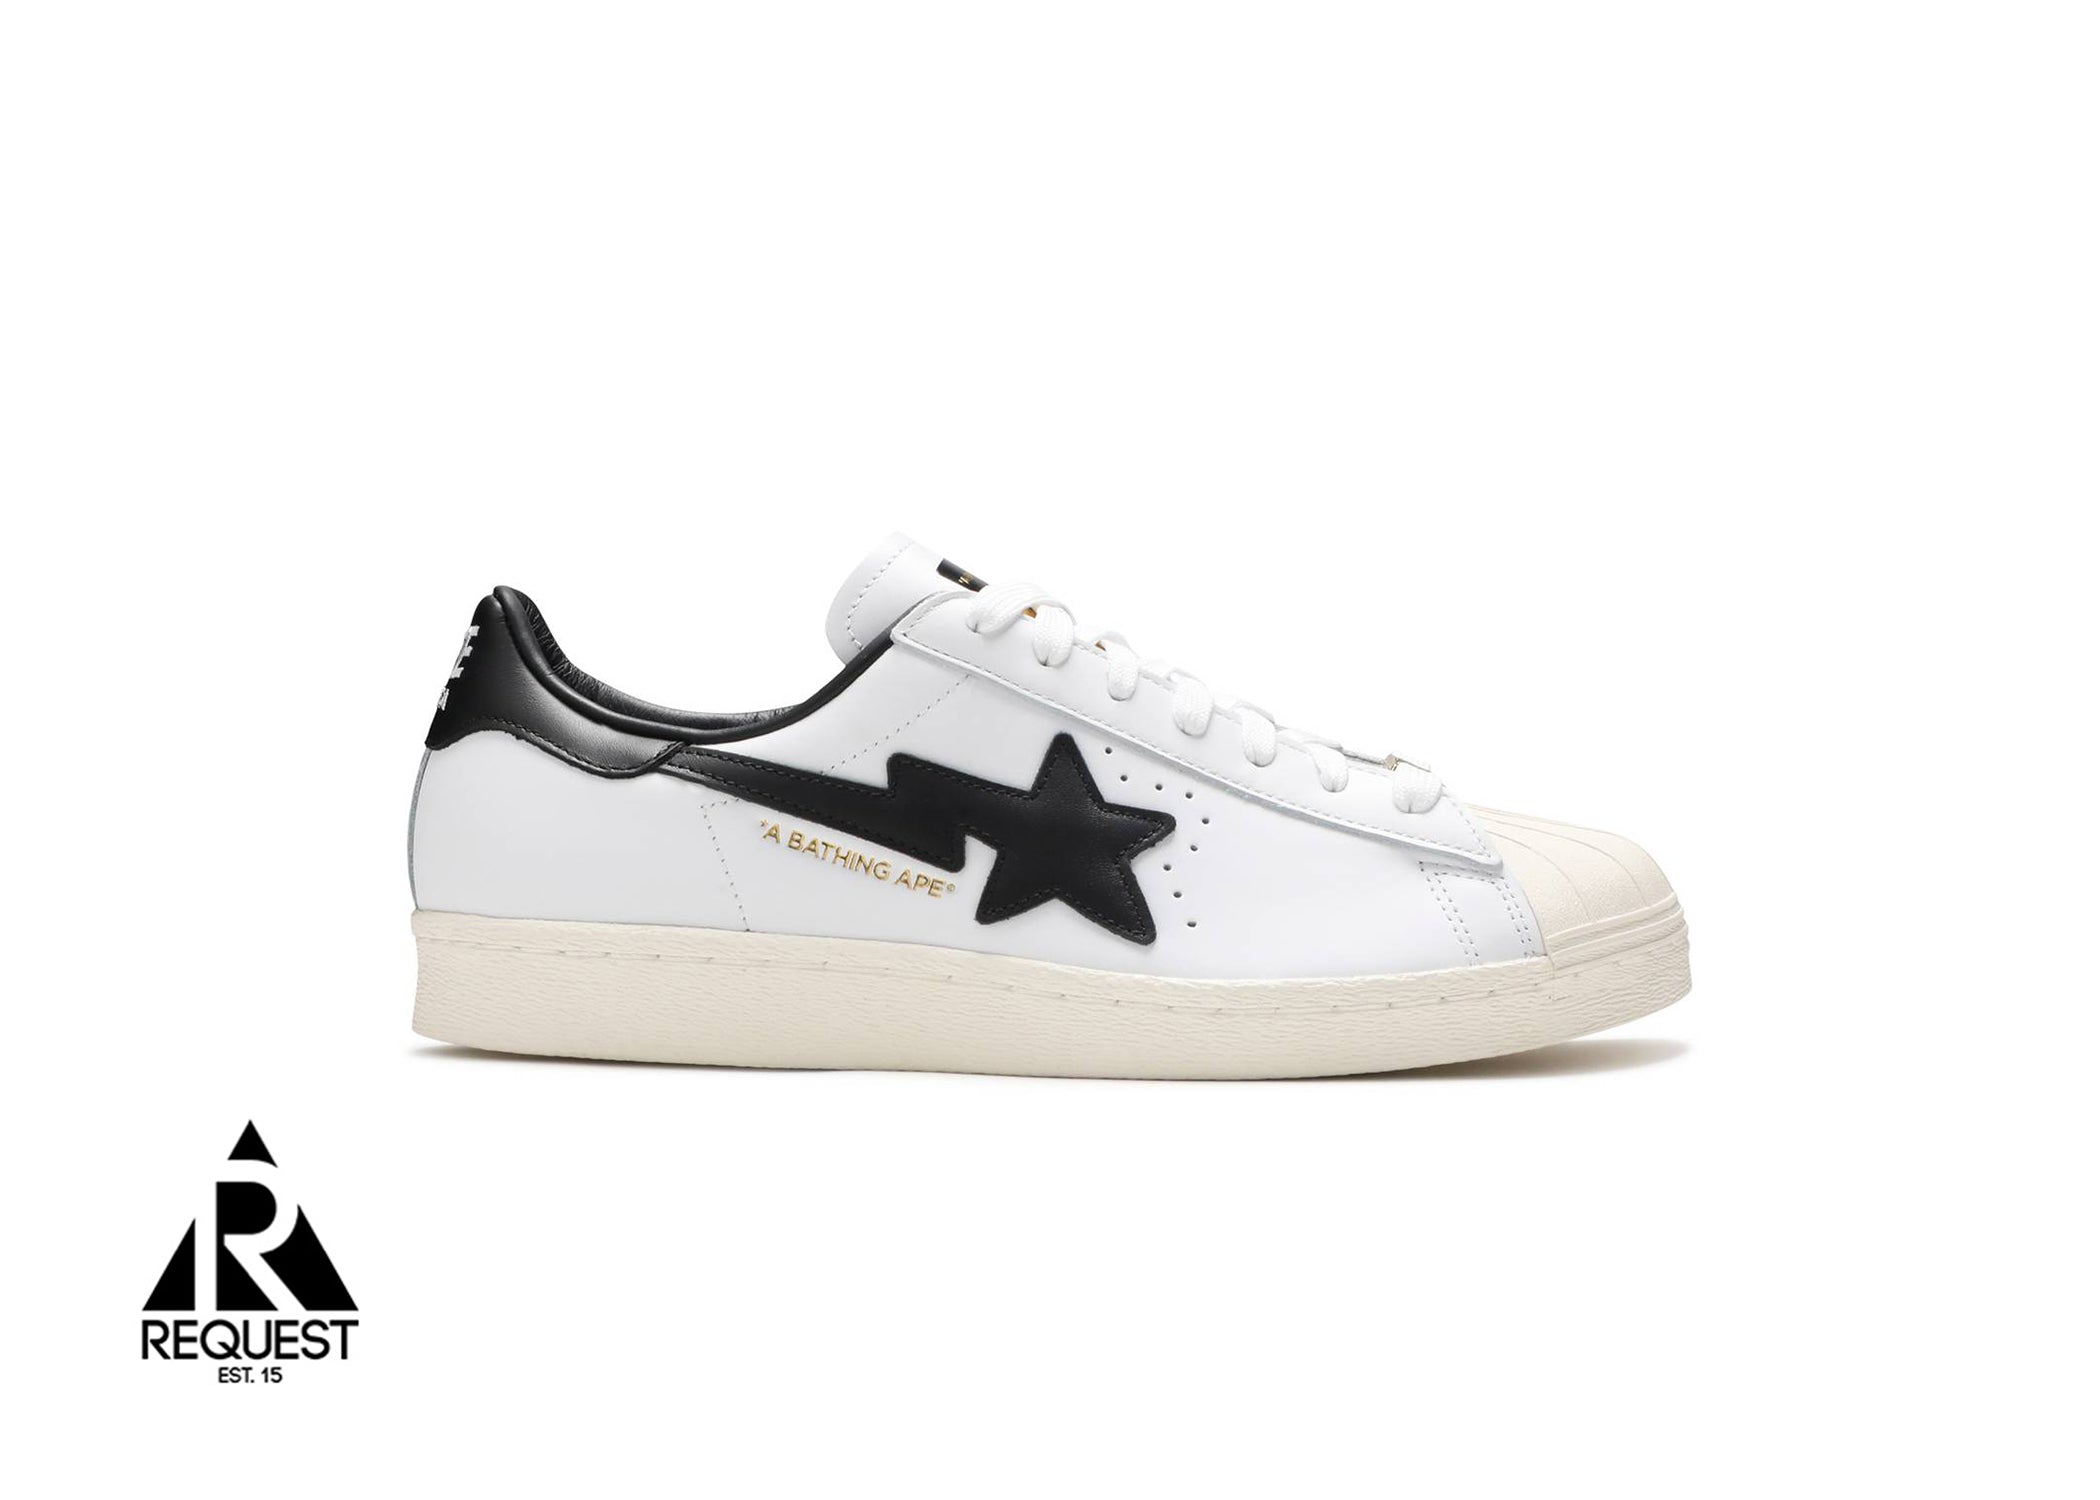 Adidas Superstar 80s Bape “White Black”